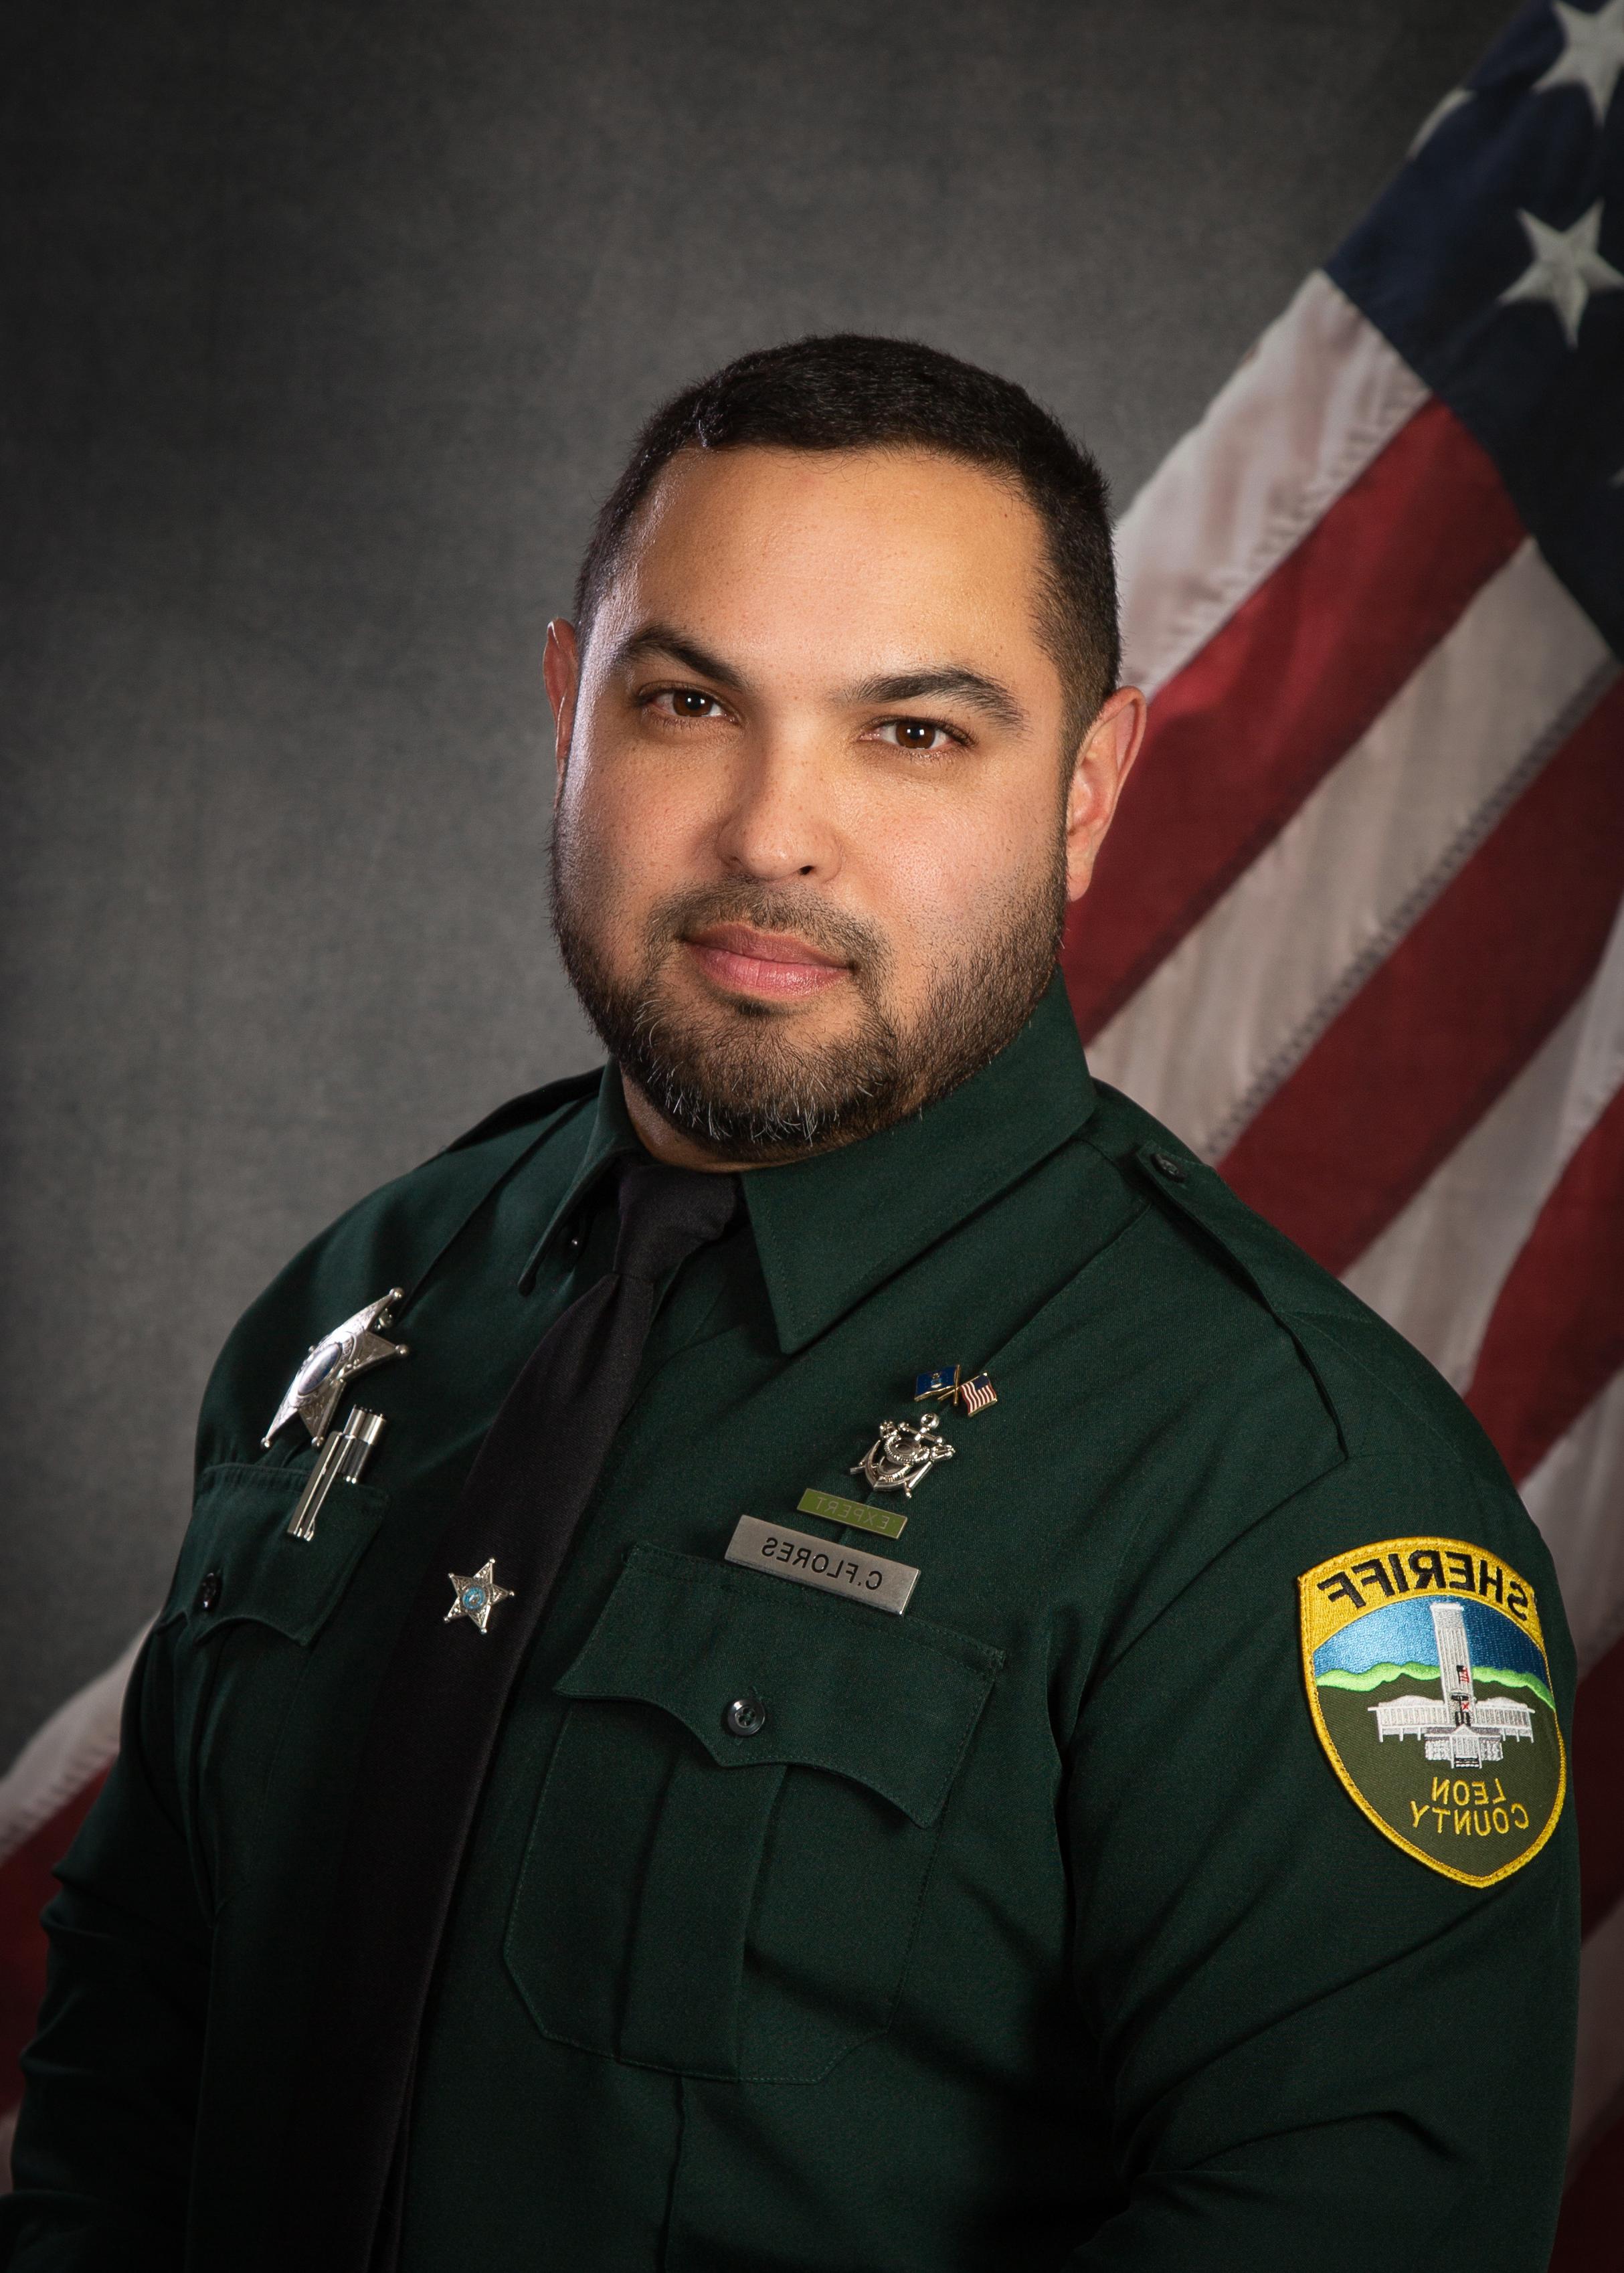 Fairview – Deputy Christopher Flores